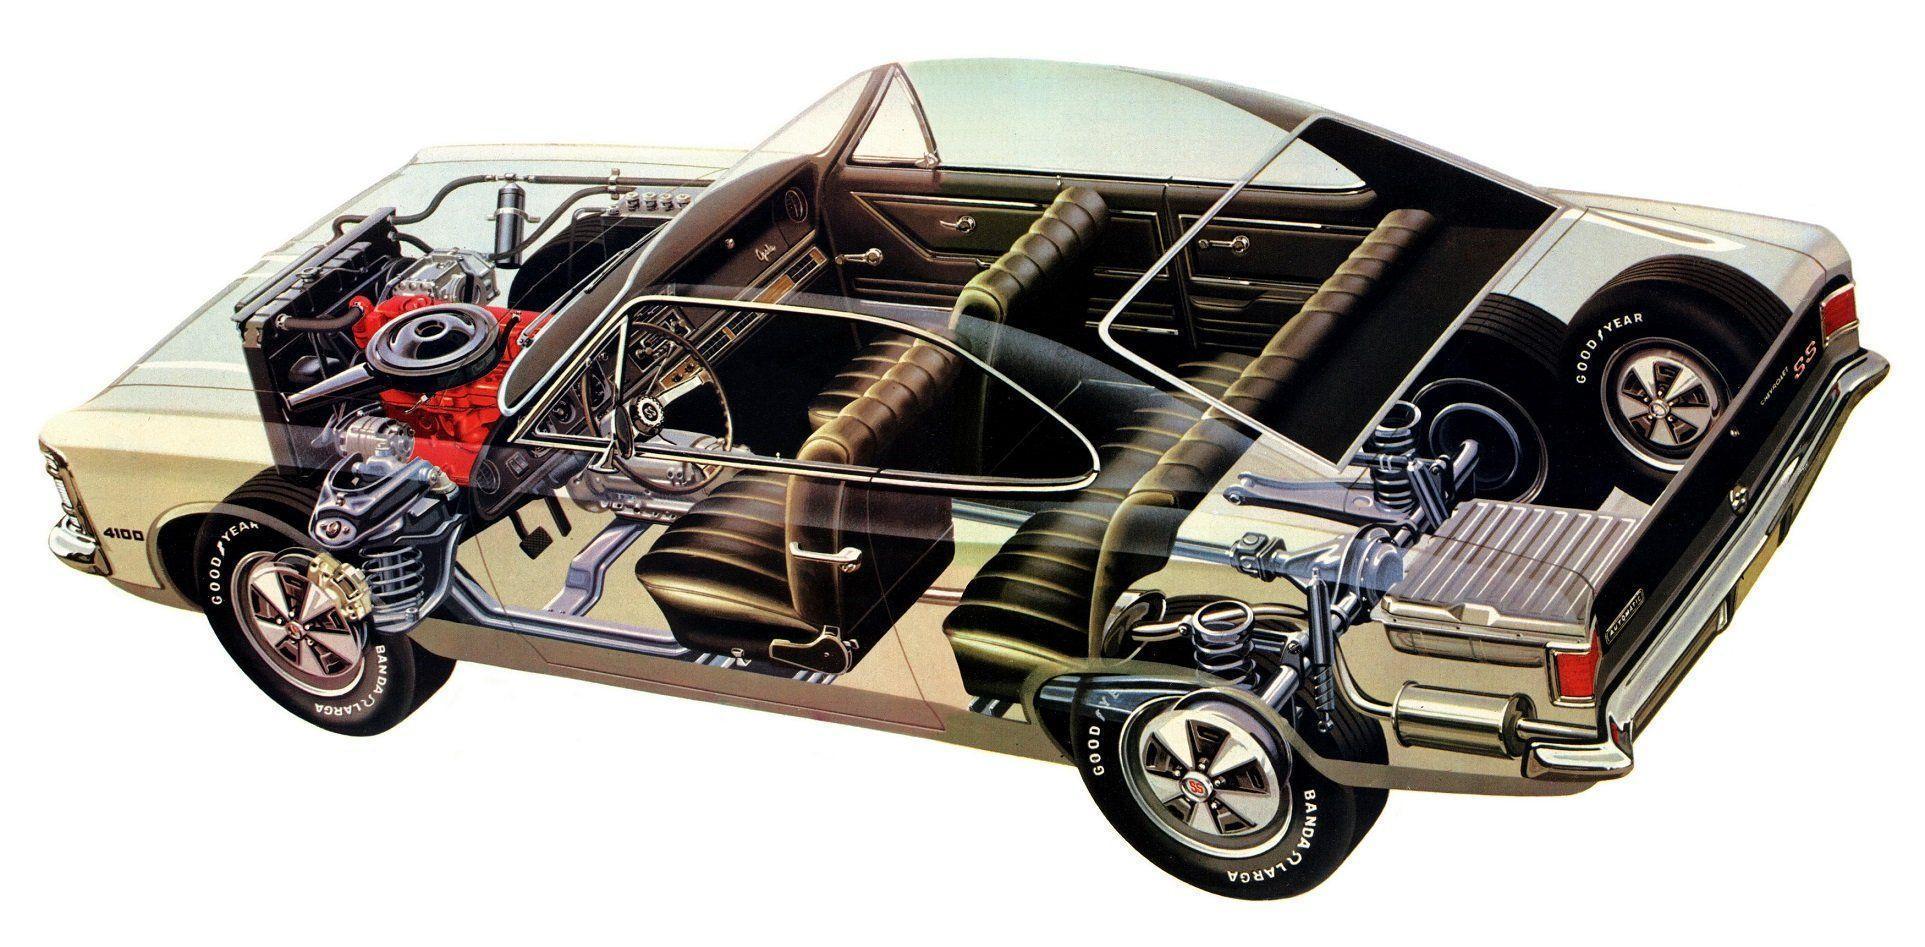 Chevrolet Opala SS 4100 1973 cars technical cutaway wallpaper